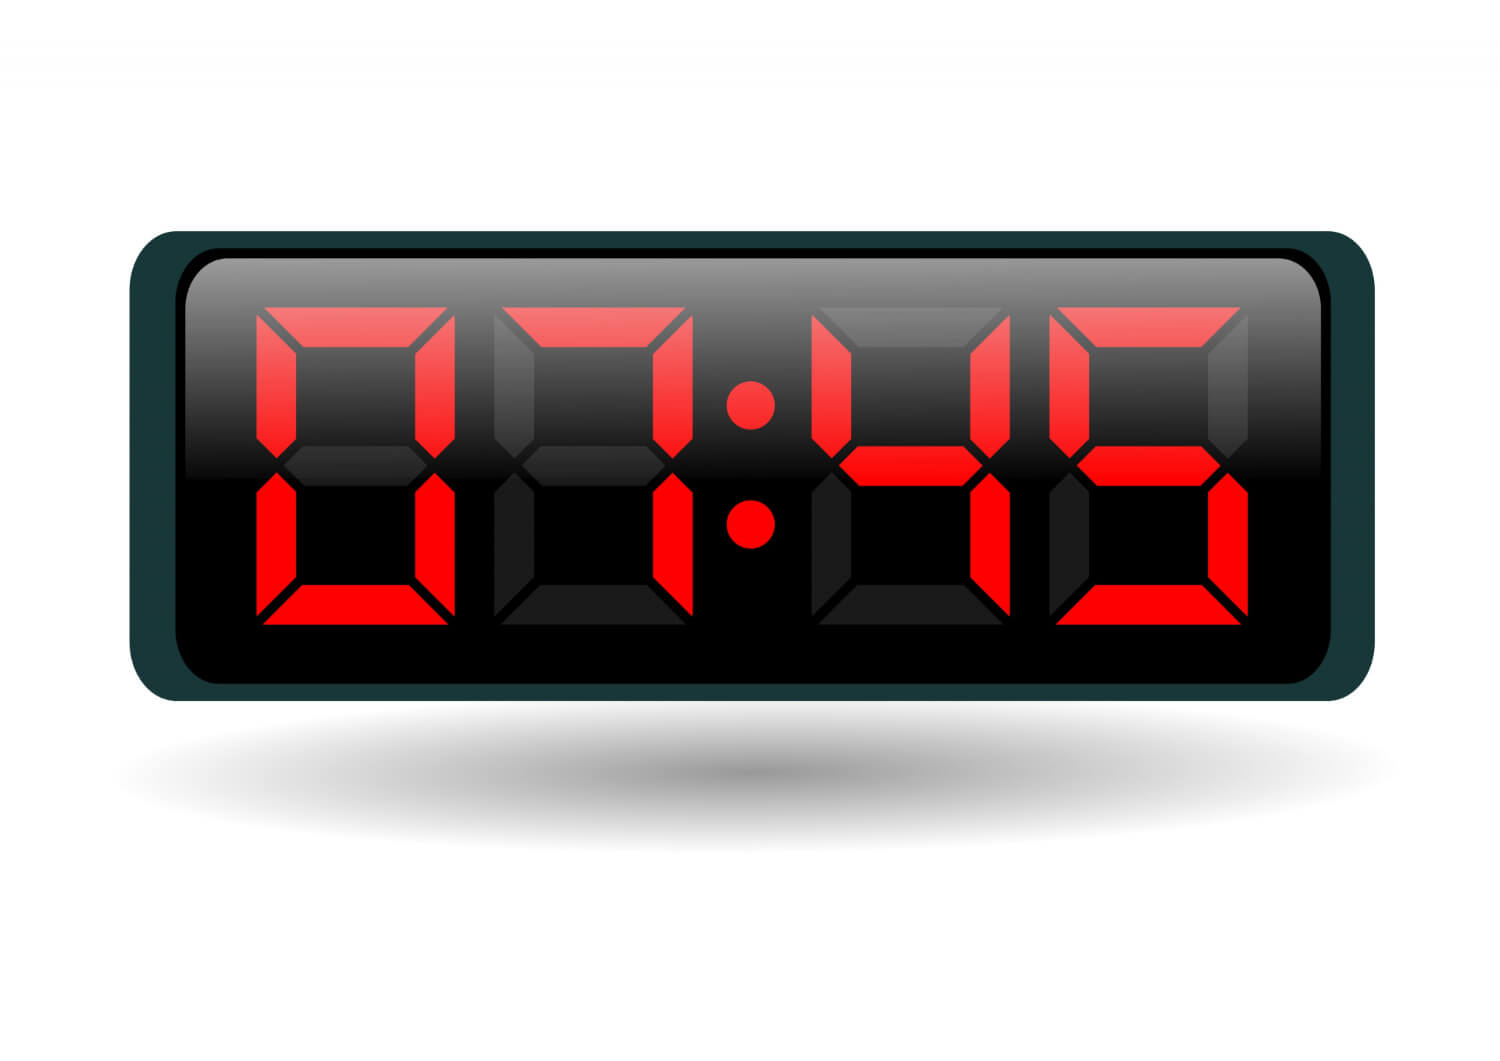 7 45 на часах. Часы электронные Red number Clock. Часы Digital Clock 200730138828.4. Циферблат электронных часов. Электрические часы на белом фоне.